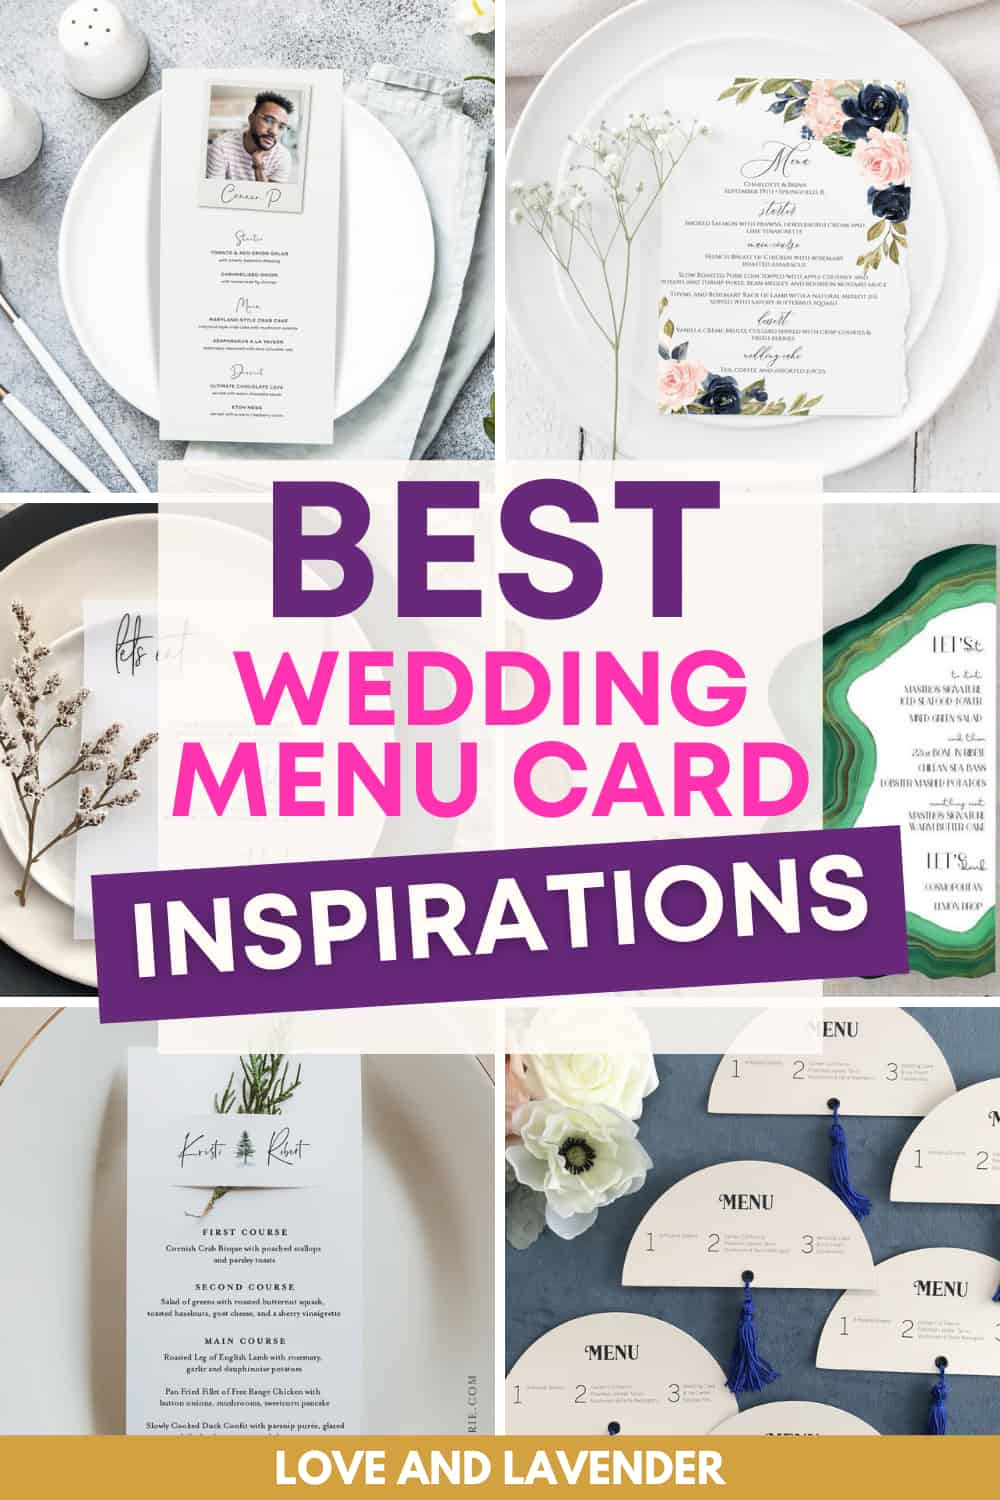 15 Unique Wedding Menu Card Ideas To Impress Wedding Guests